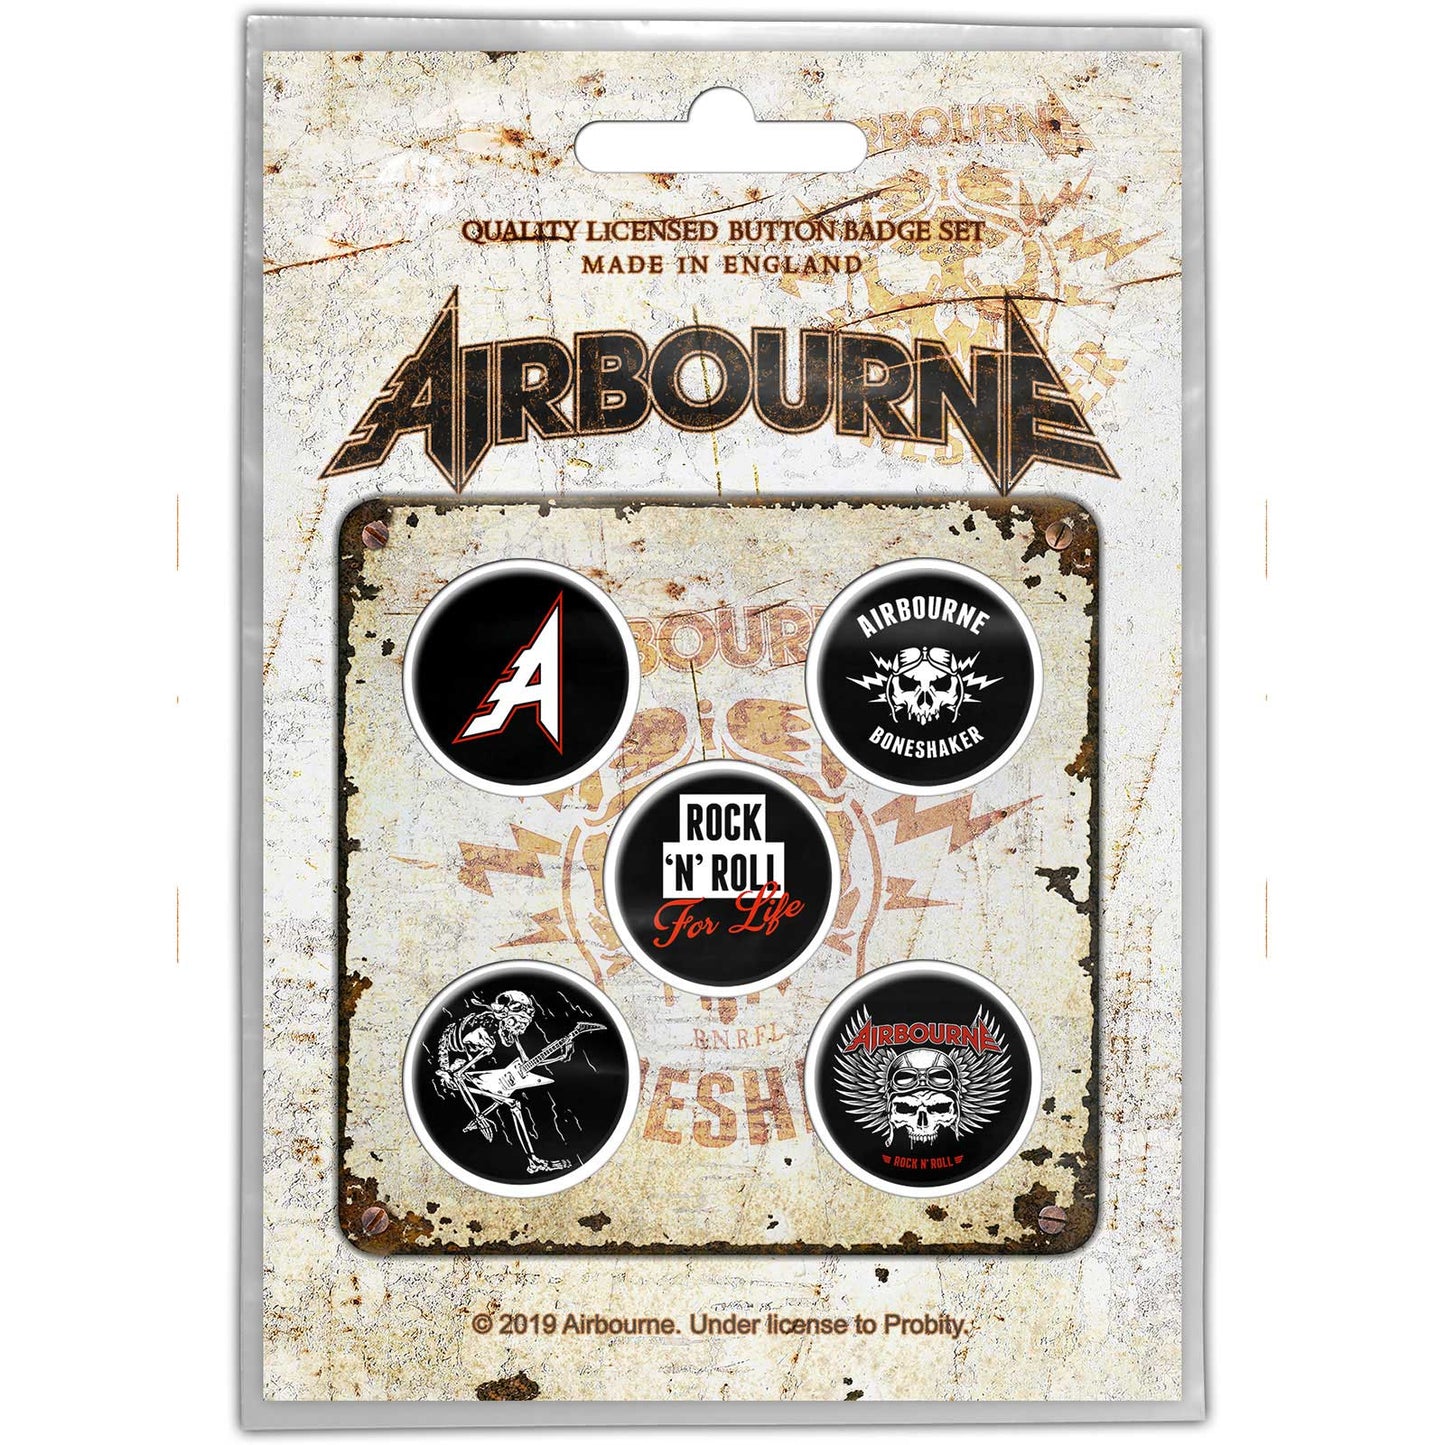 Airbourne Button Badge Pack: Boneshaker (Retail Pack)